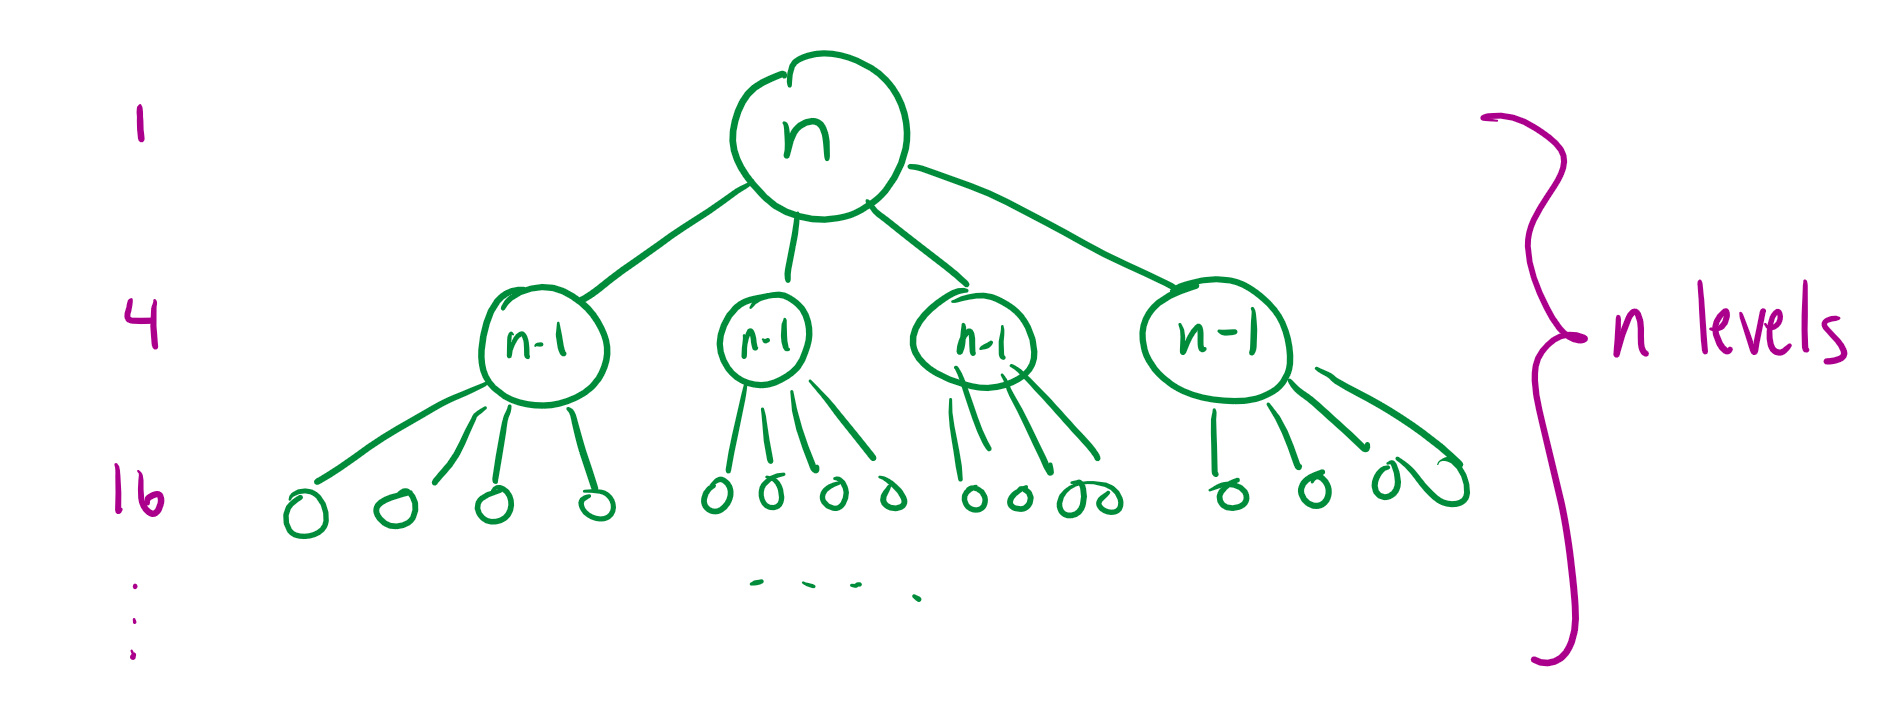 Tree diagram for method calls.